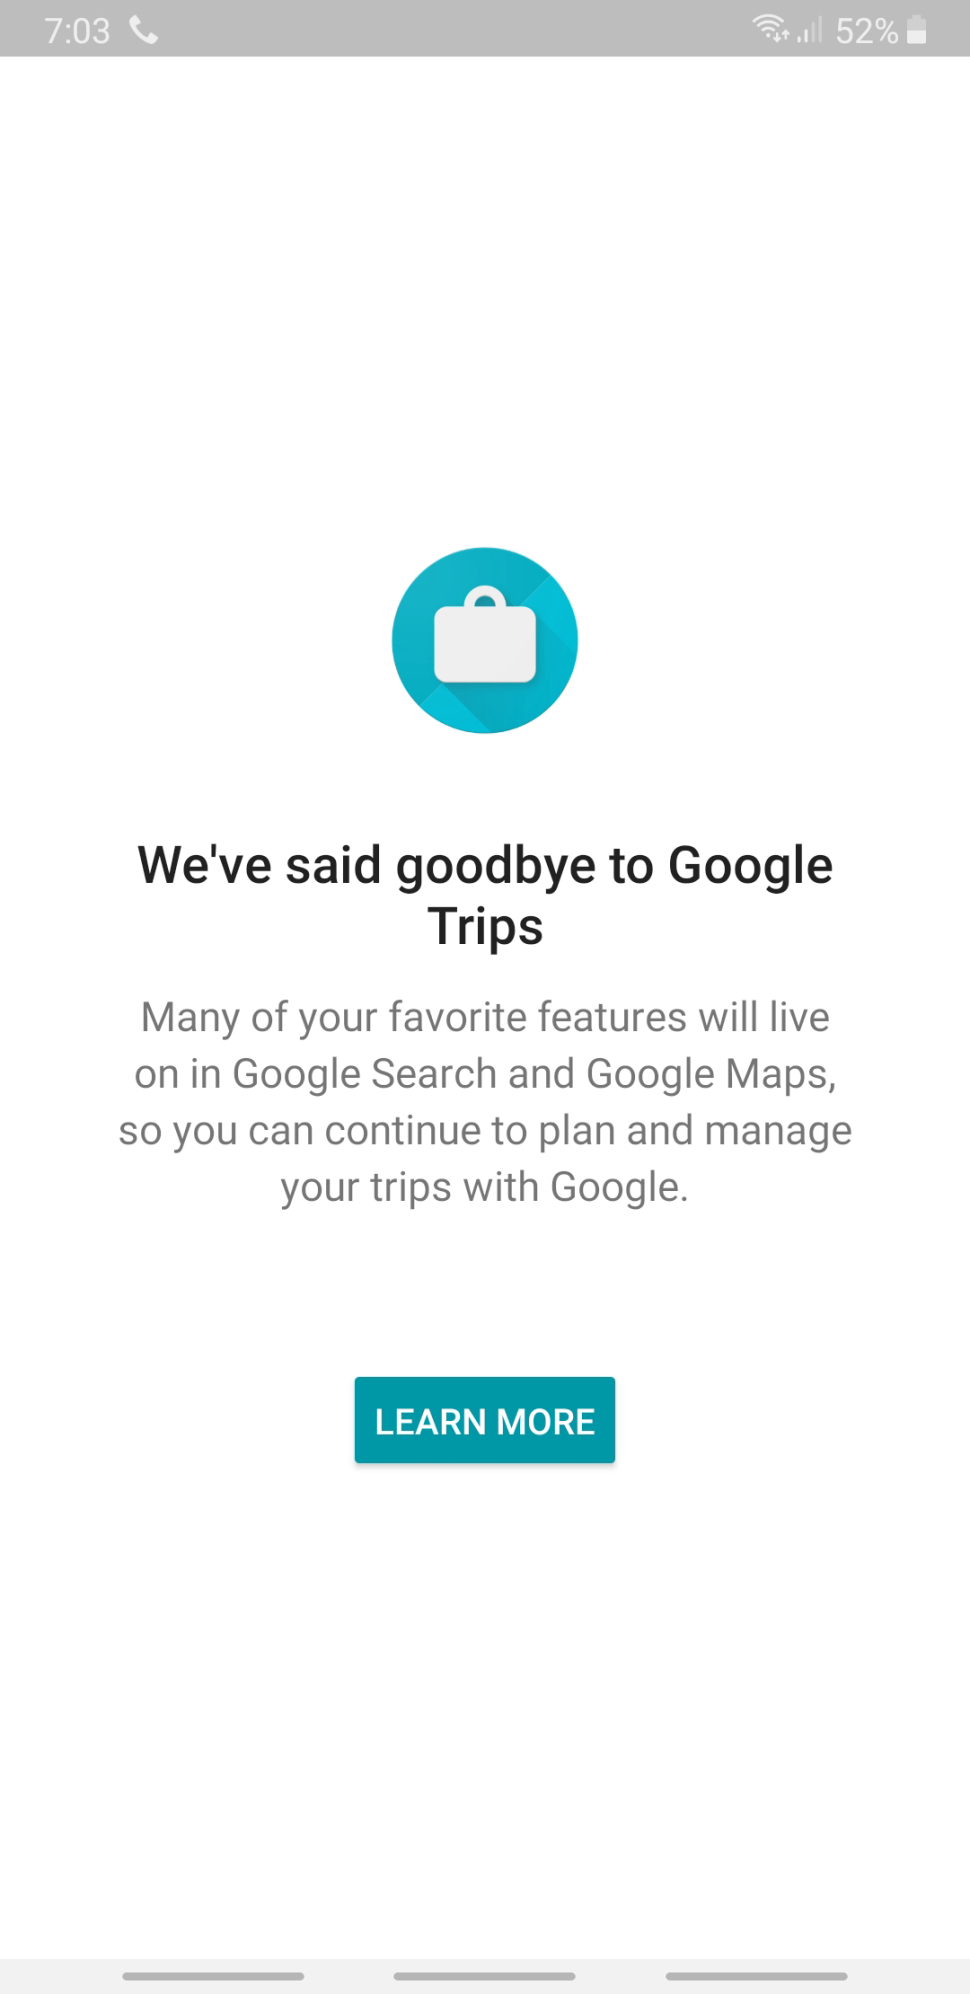 Google bids Google Trips goobye following the launch of Google Travel